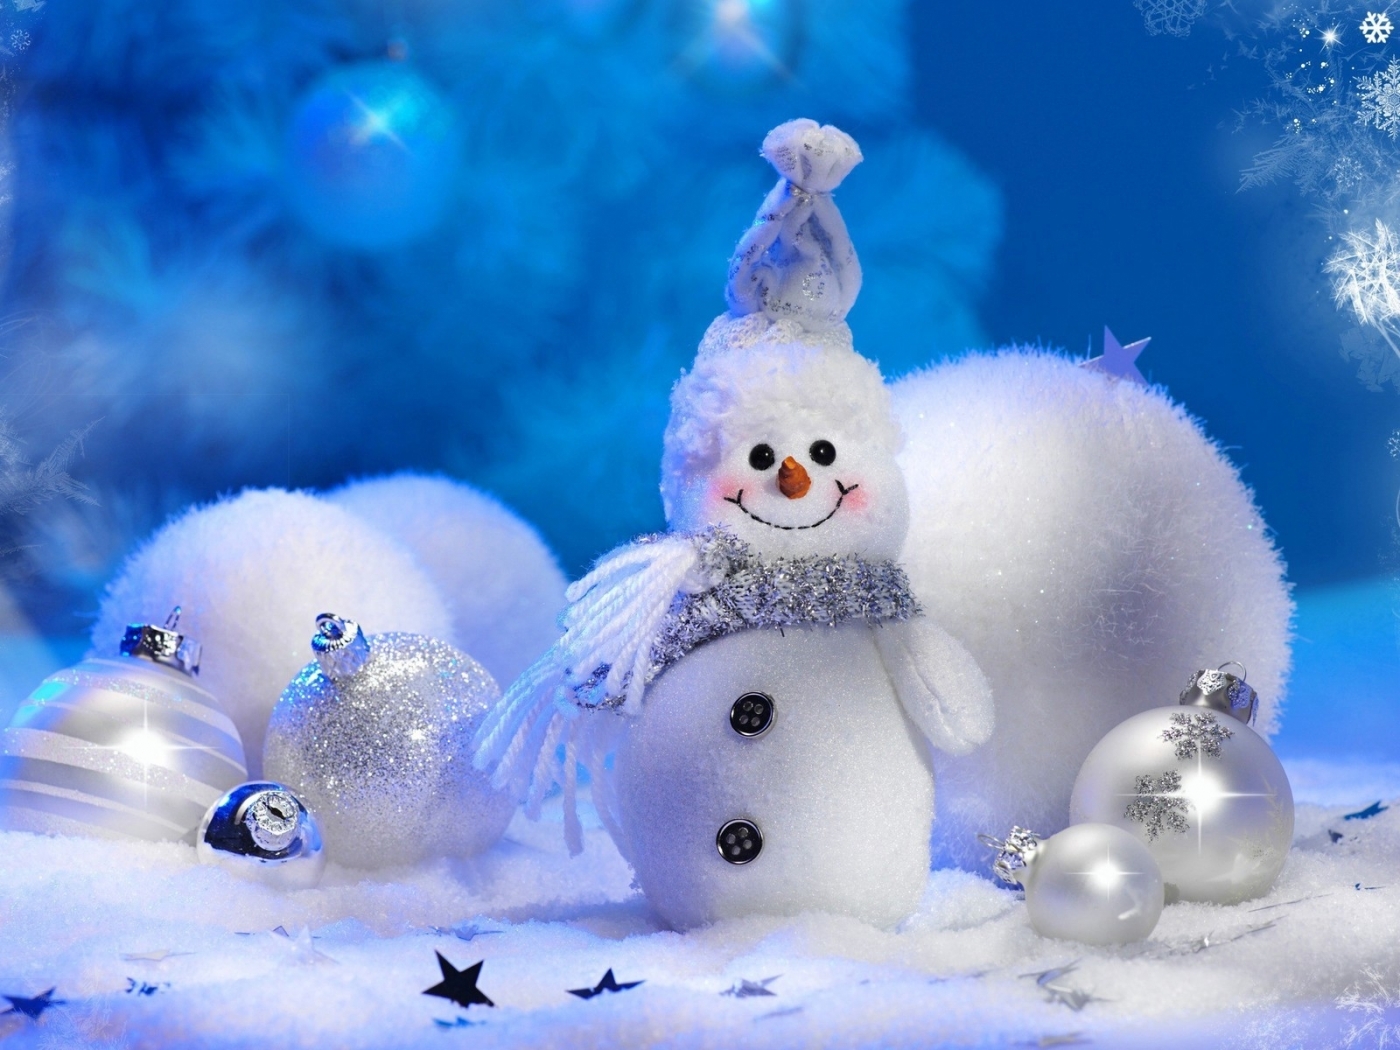 29287 Заставки и Обои Снеговики на телефон. Скачать новый год (new year), снеговики, праздники, фон, синие картинки бесплатно